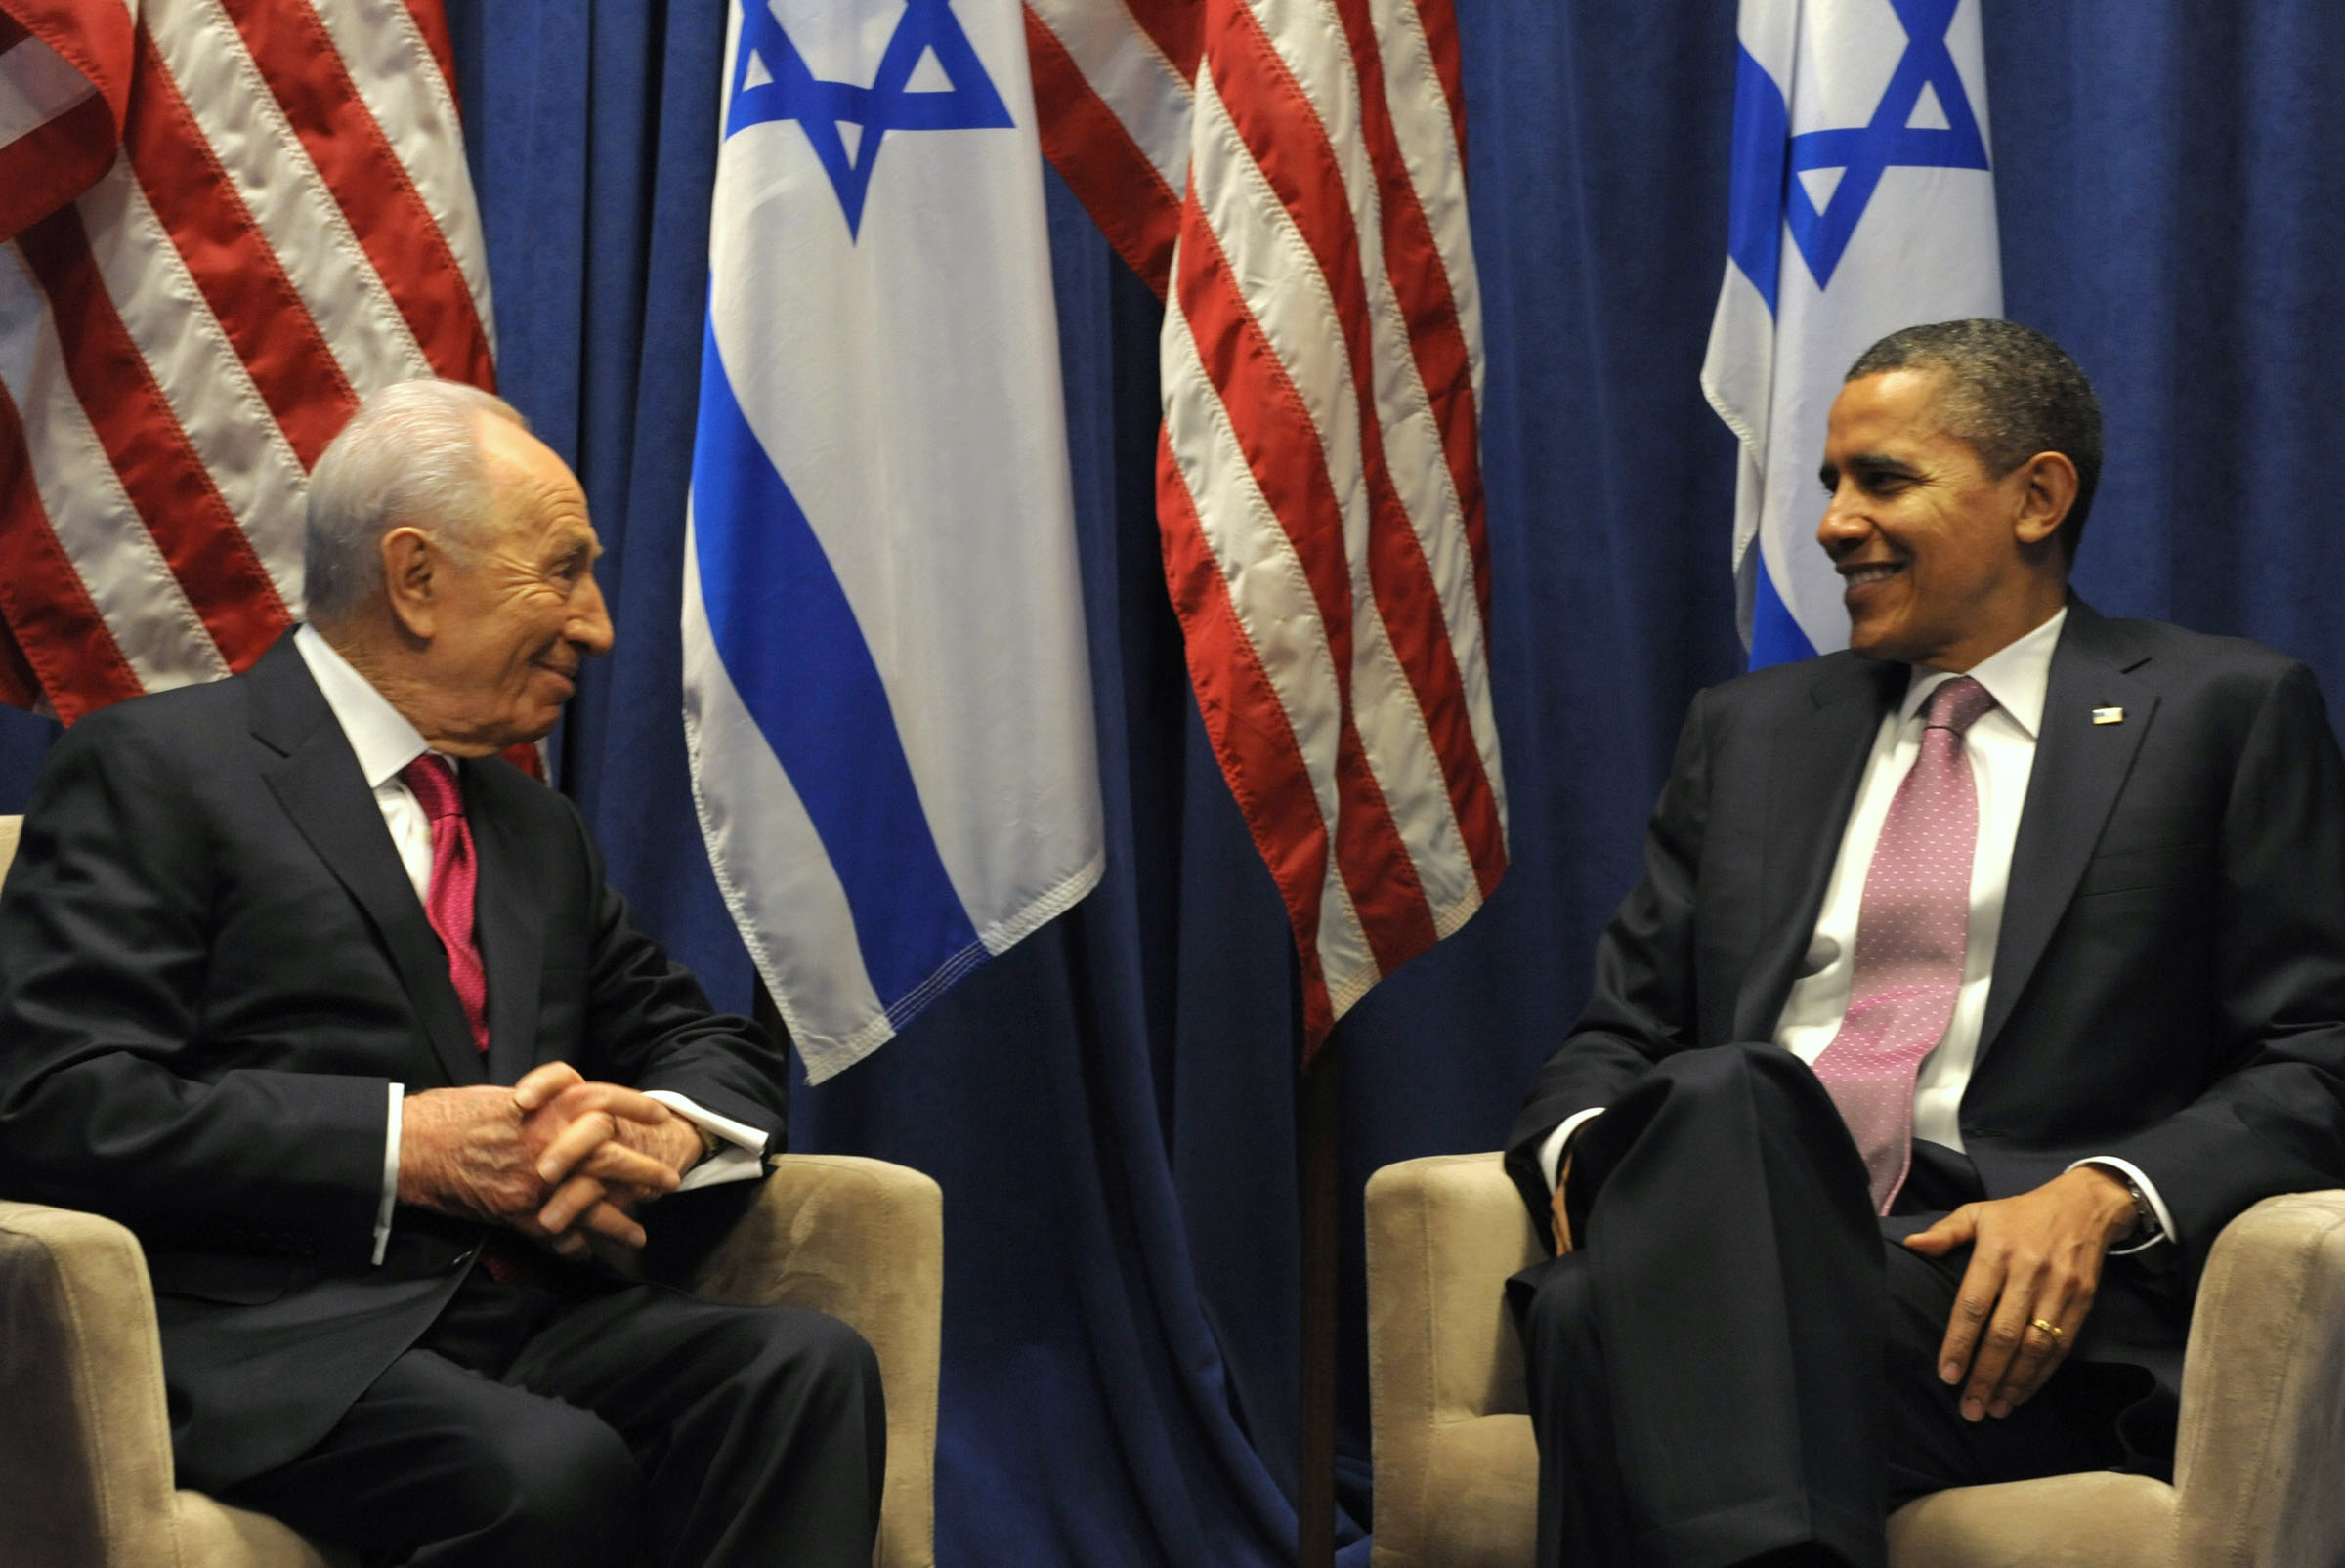 Barack Obama, Kärnvapen, Krig, Benjamin Netanyahu, Iran, USA, Israel